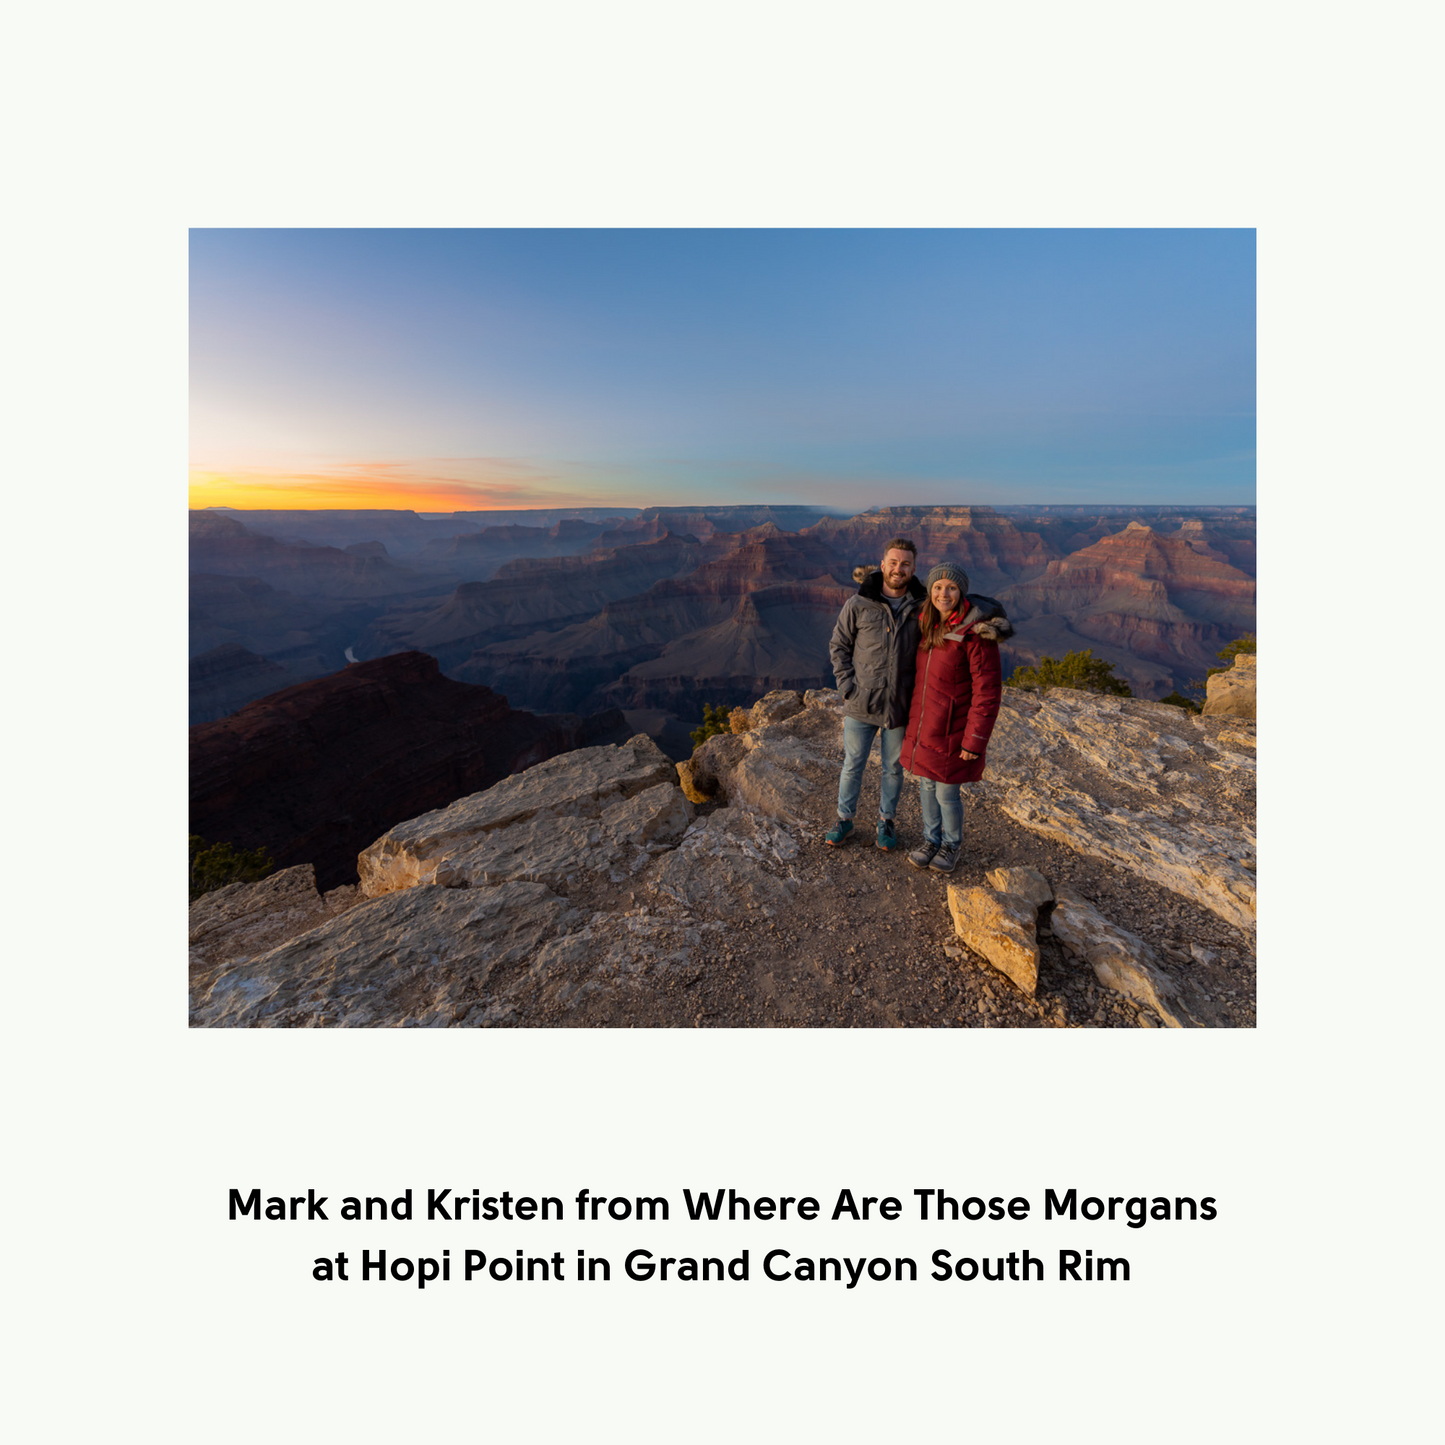 Grand Canyon South Rim Travel Guidebook